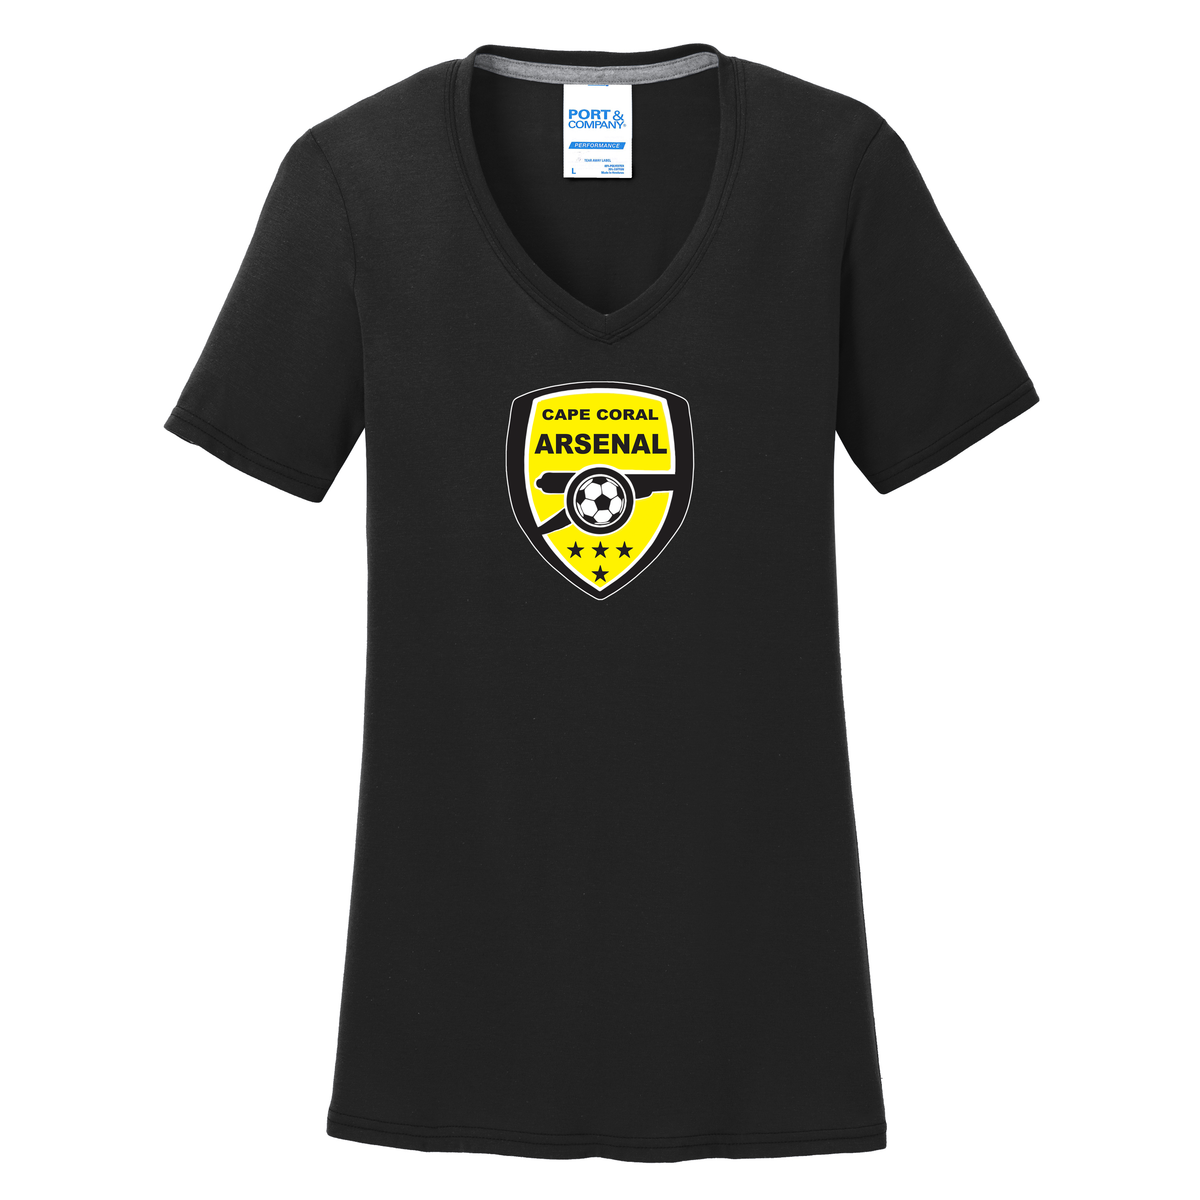 Cape Coral Arsenal Women's T-Shirt